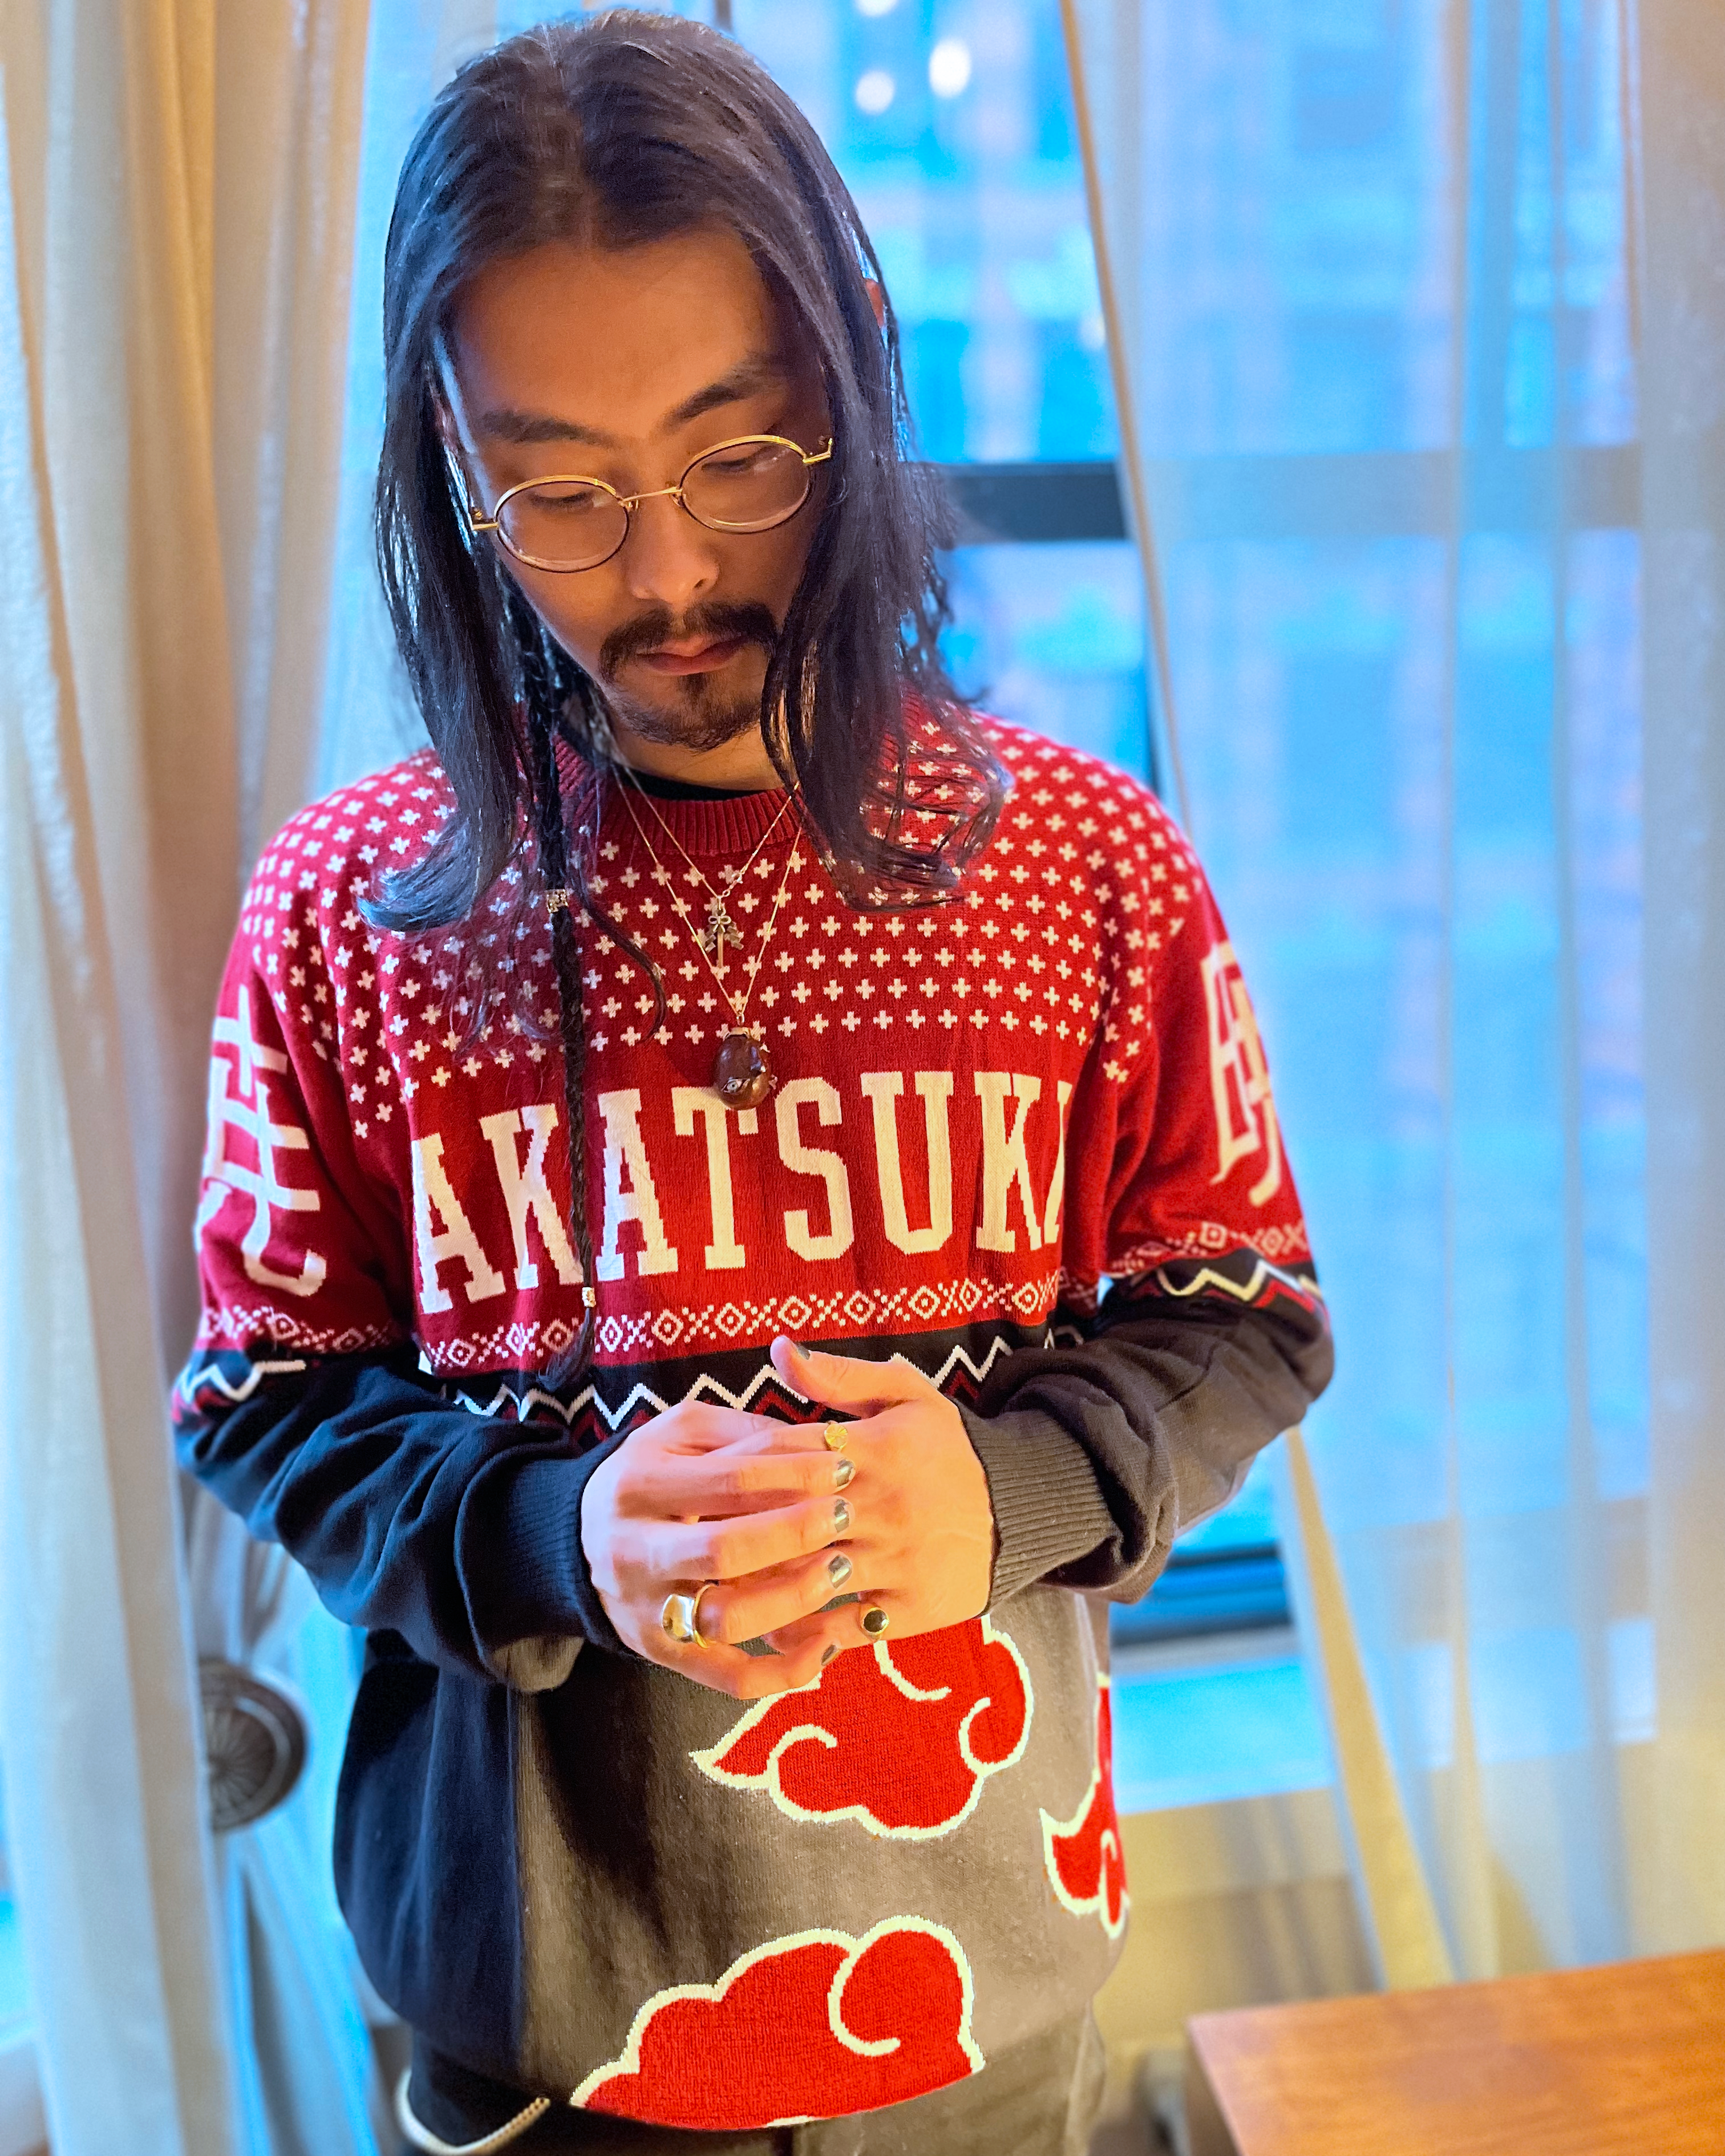 Naruto Shippuden - Akatsuki Holiday Sweater image count 3